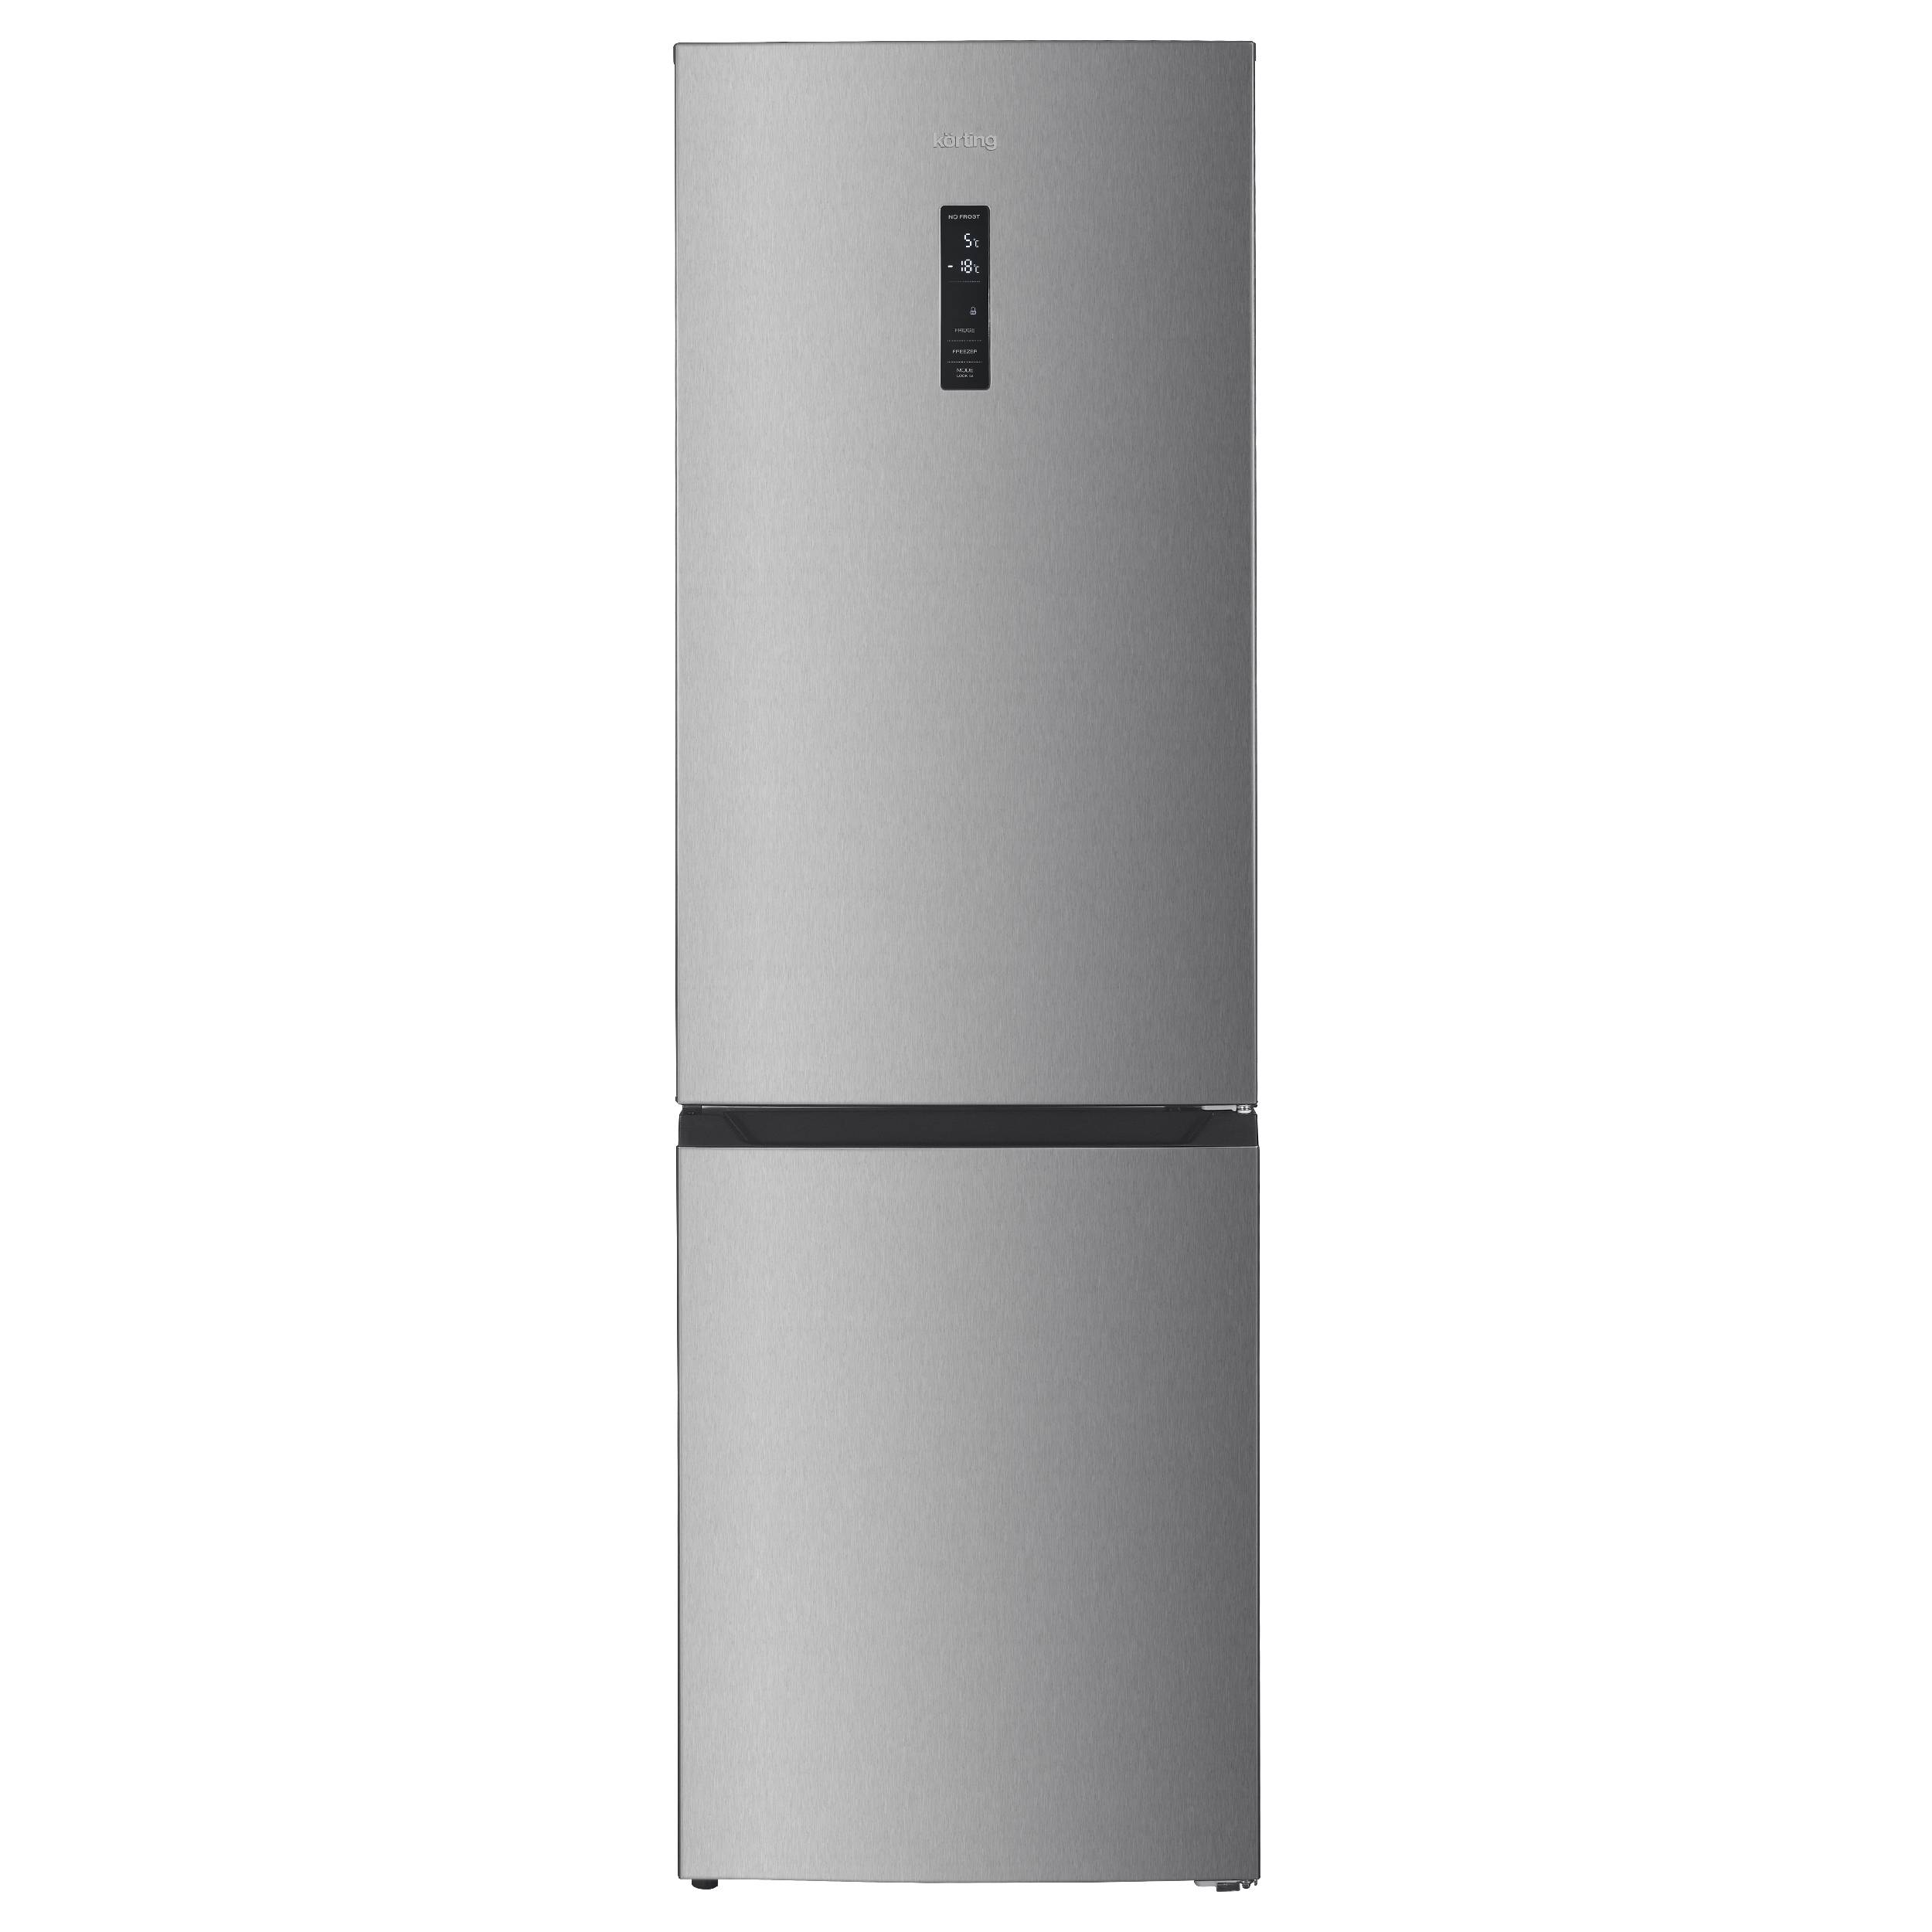 Холодильник Korting KNFC 62980 X серебристый, серый холодильник korting knfc 62029 x серый